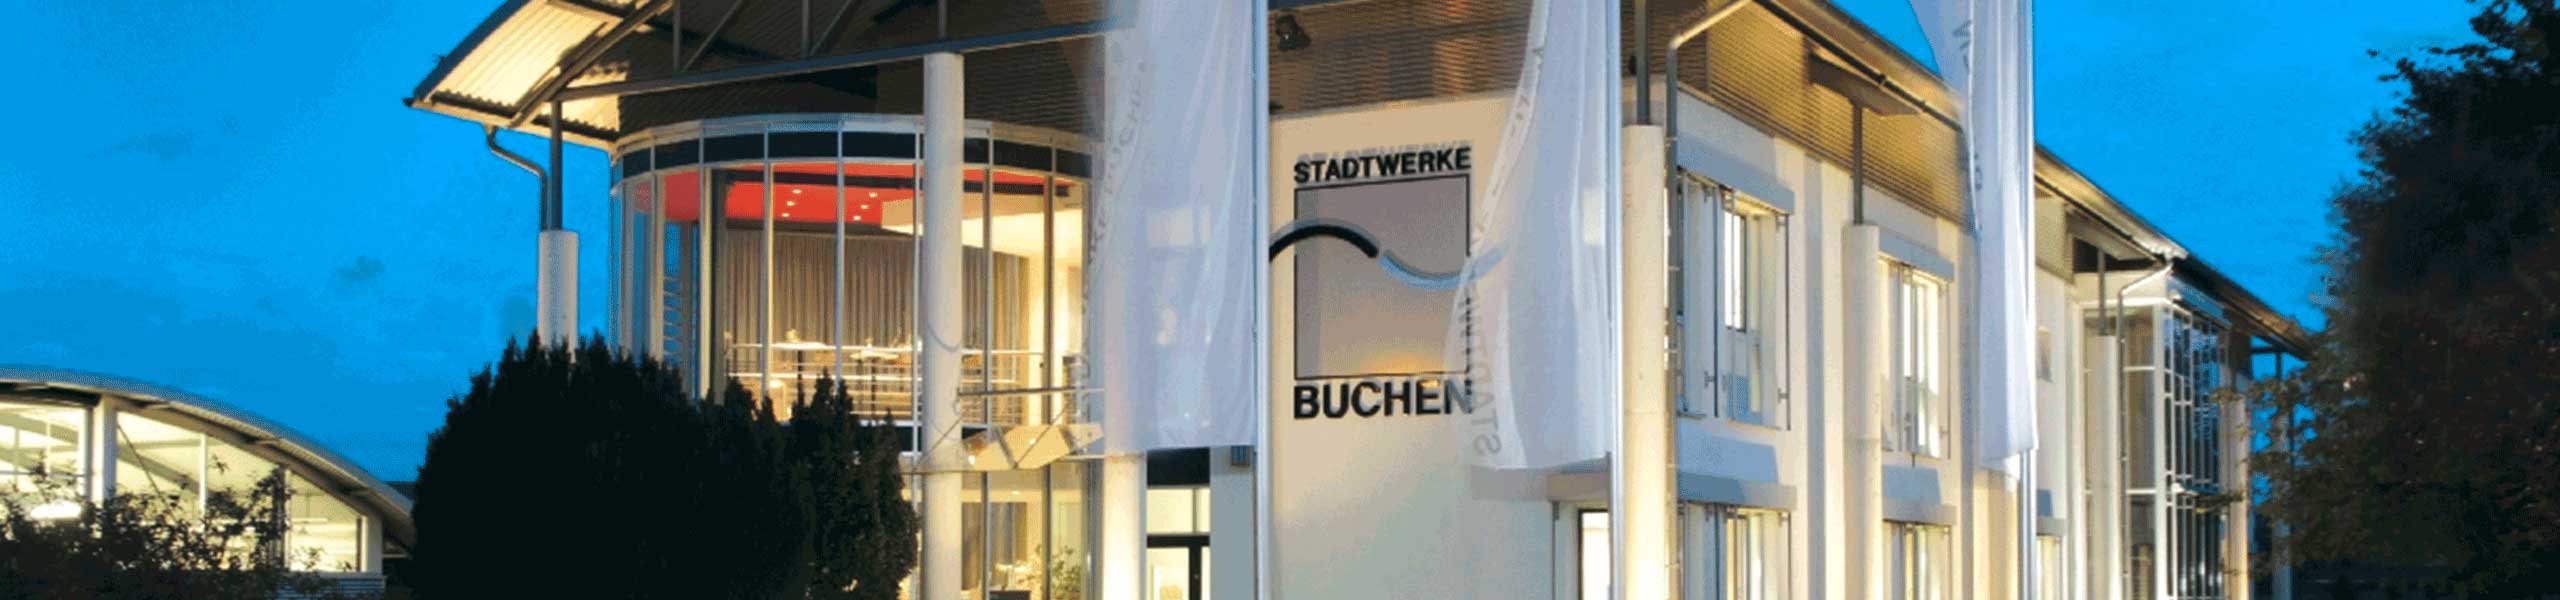 Stadtwerke Buchen GmbH & Co KG - Installateure